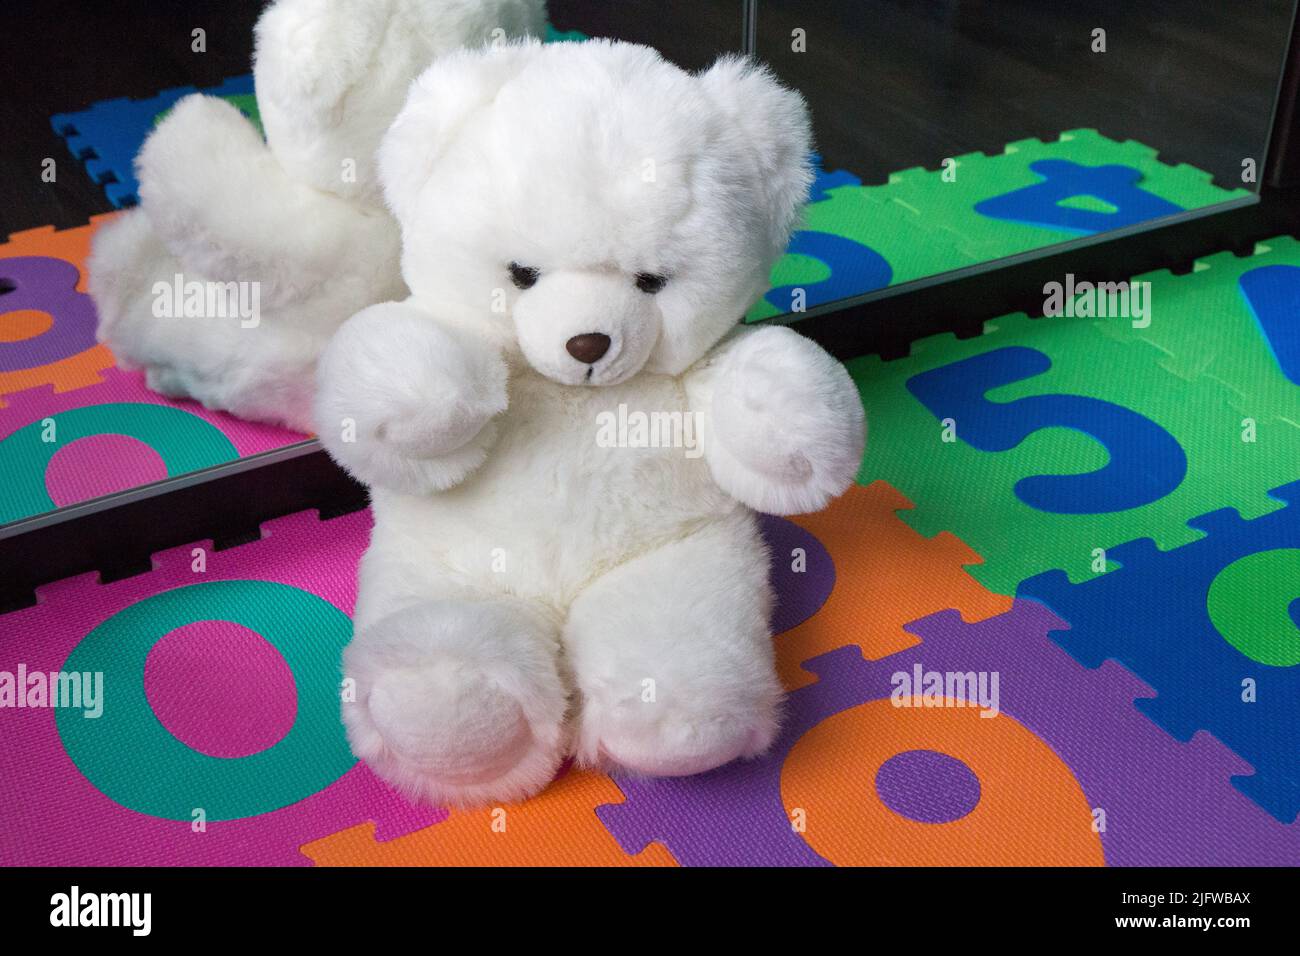 A fluffy white teddy bear Stock Photo